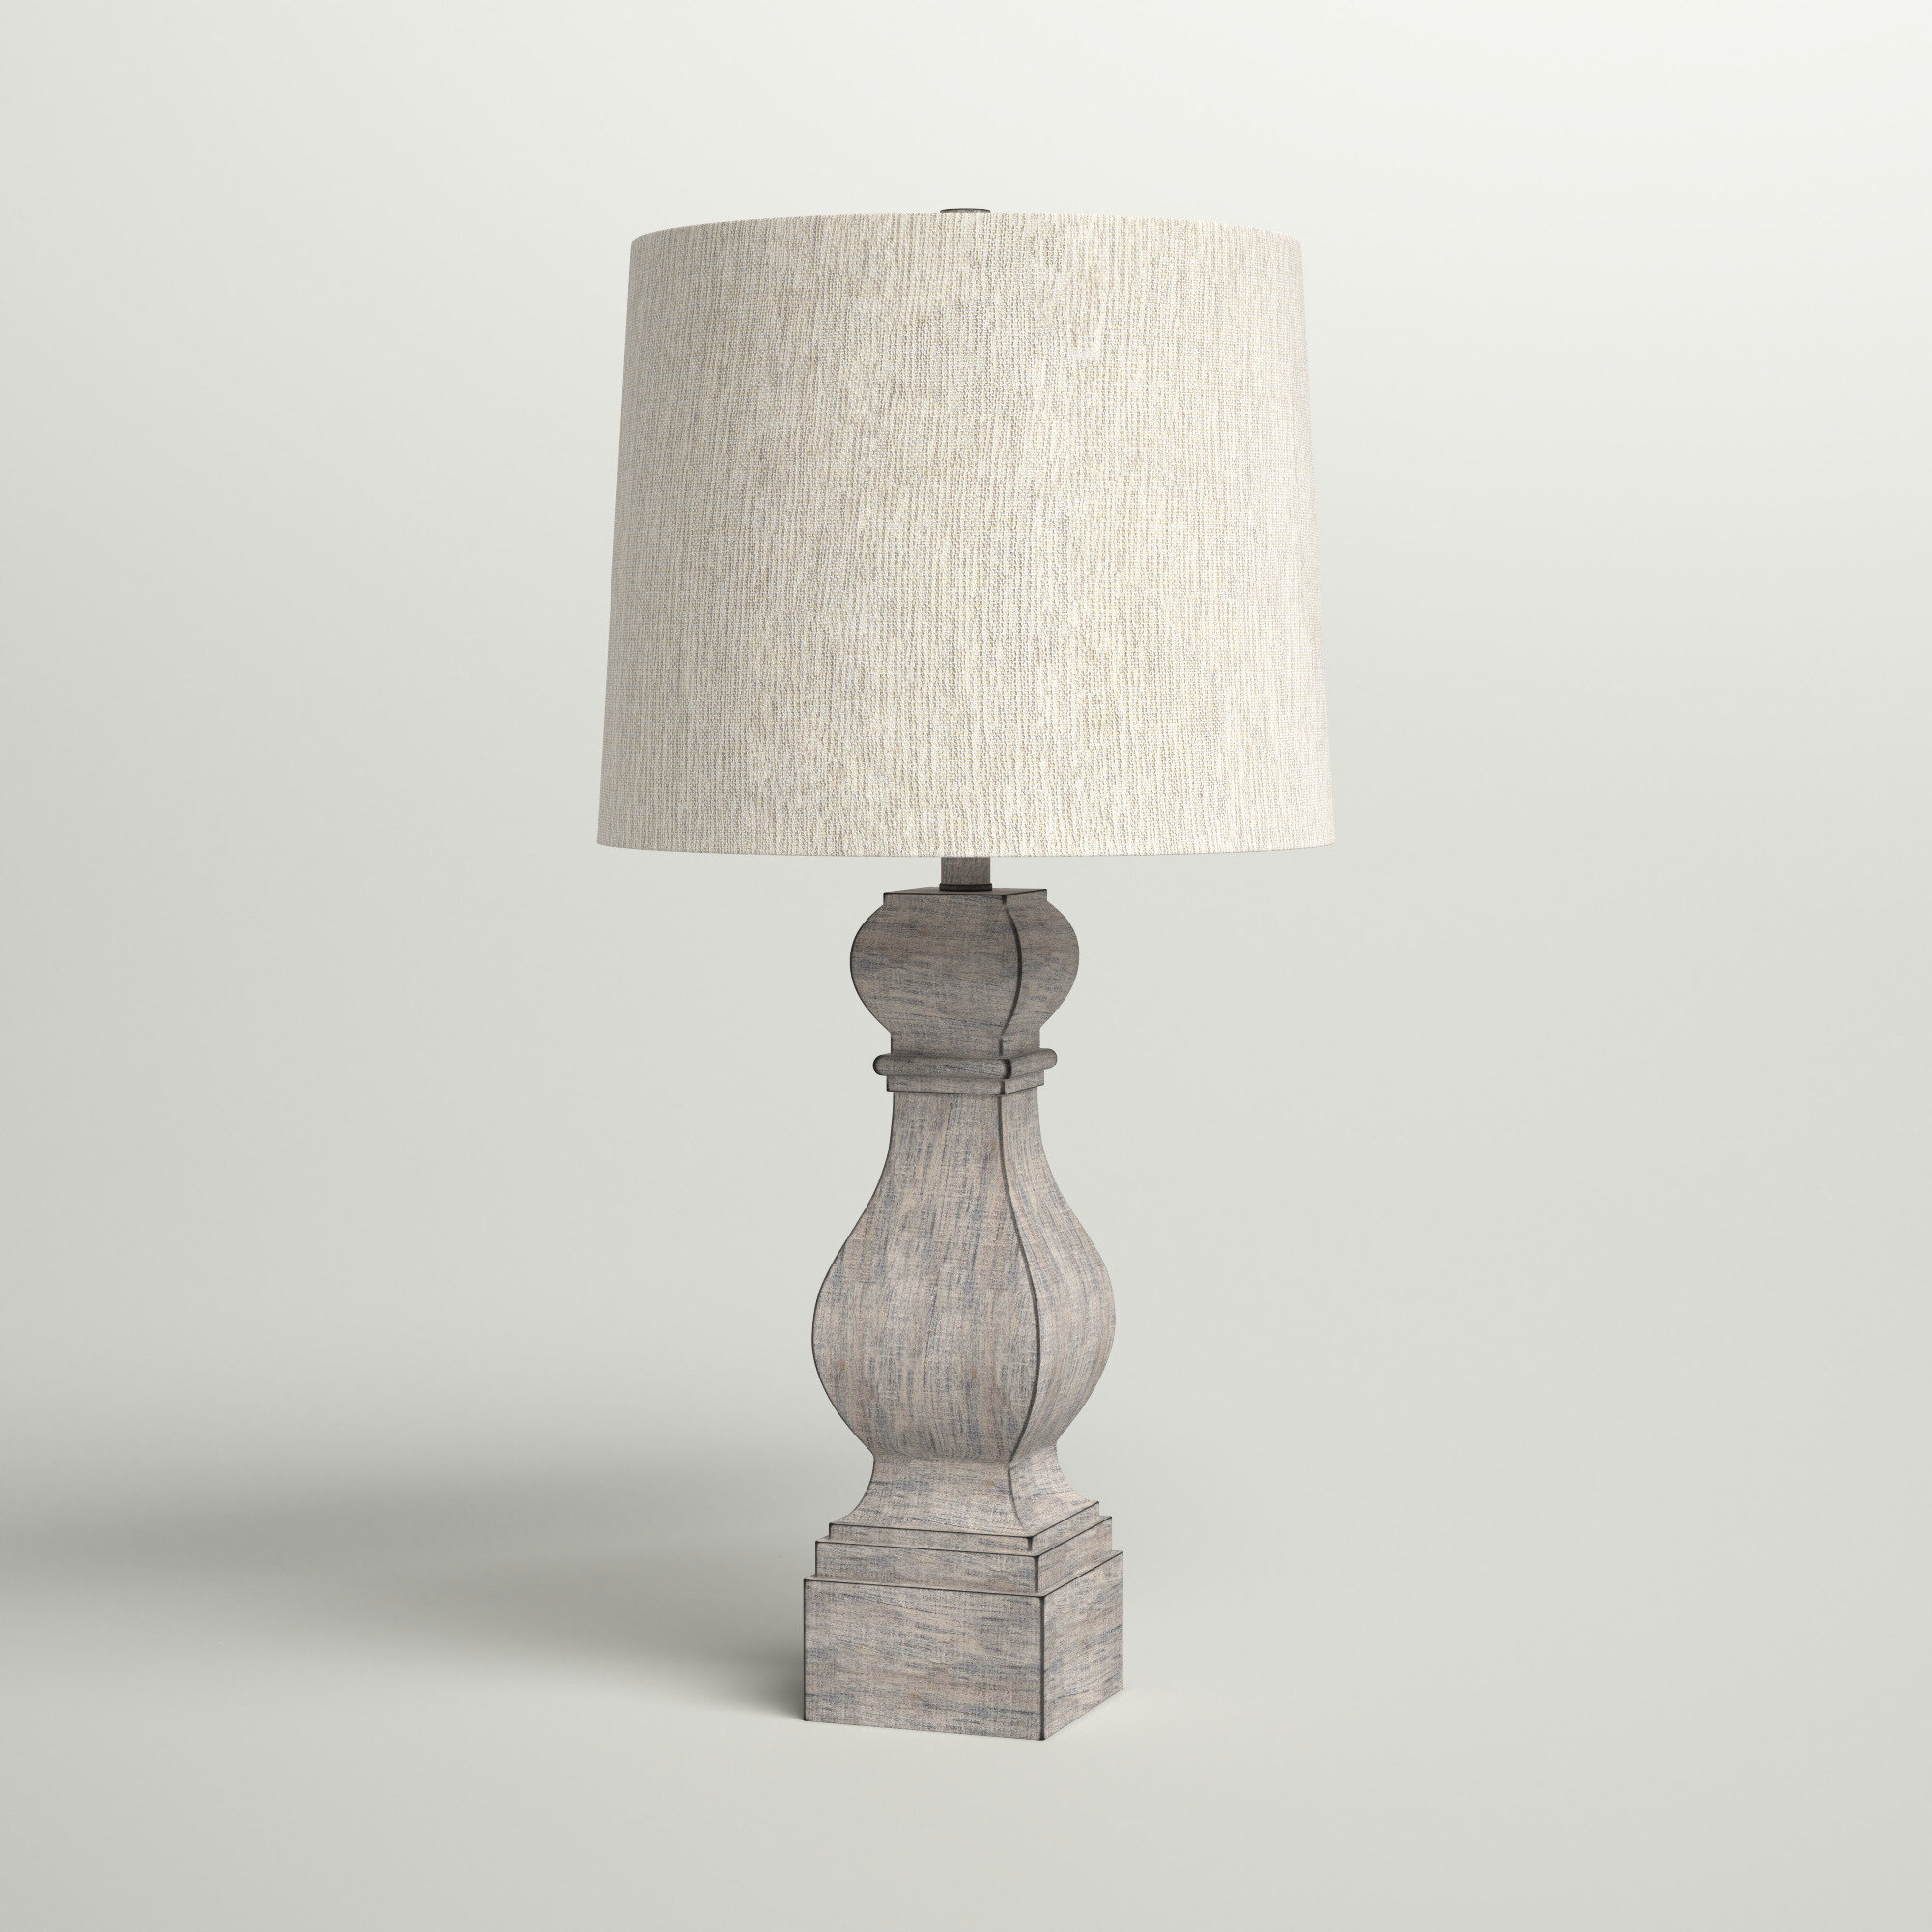 1PCS Retro Industrial Wood Base Design Table Lamp Desk lamp Floor Light 